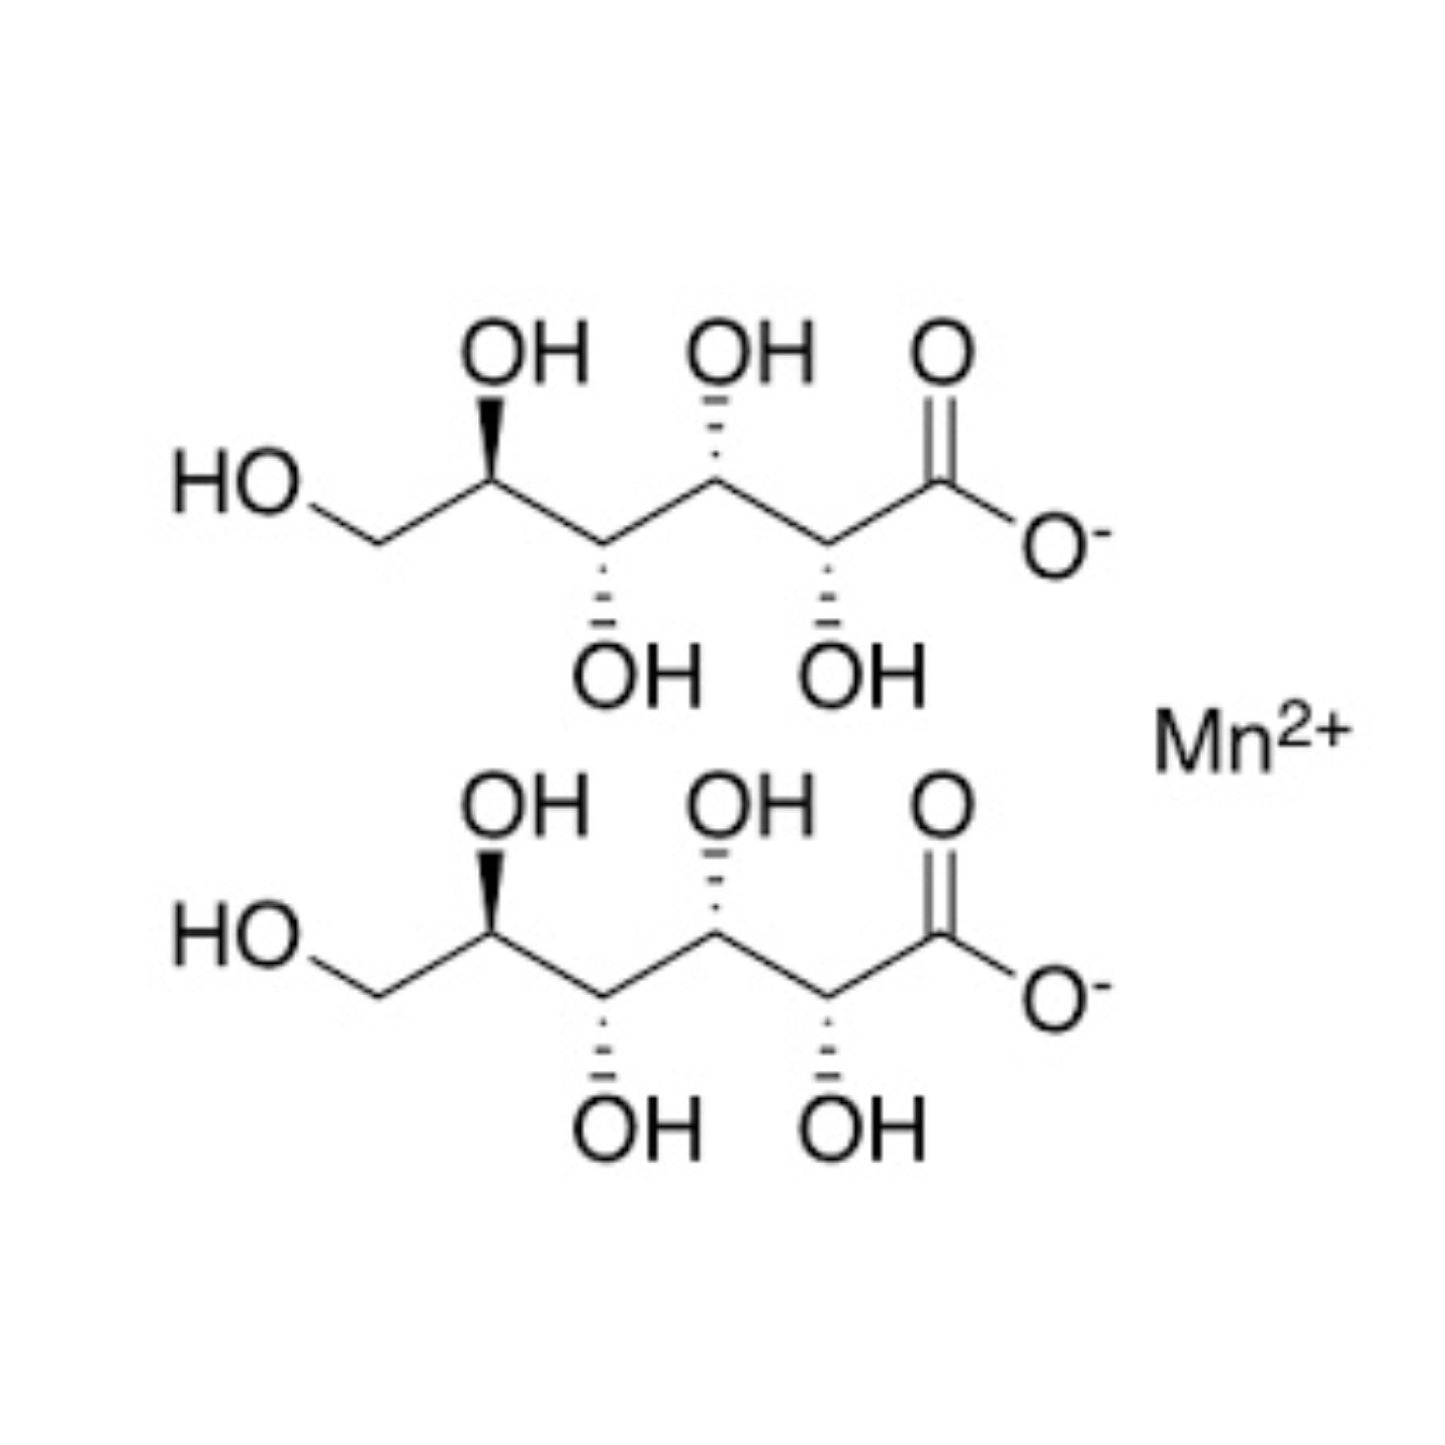 3 Manganese Gluconate - (200 mg Maximum Daily Dosage) - Three Ingredients